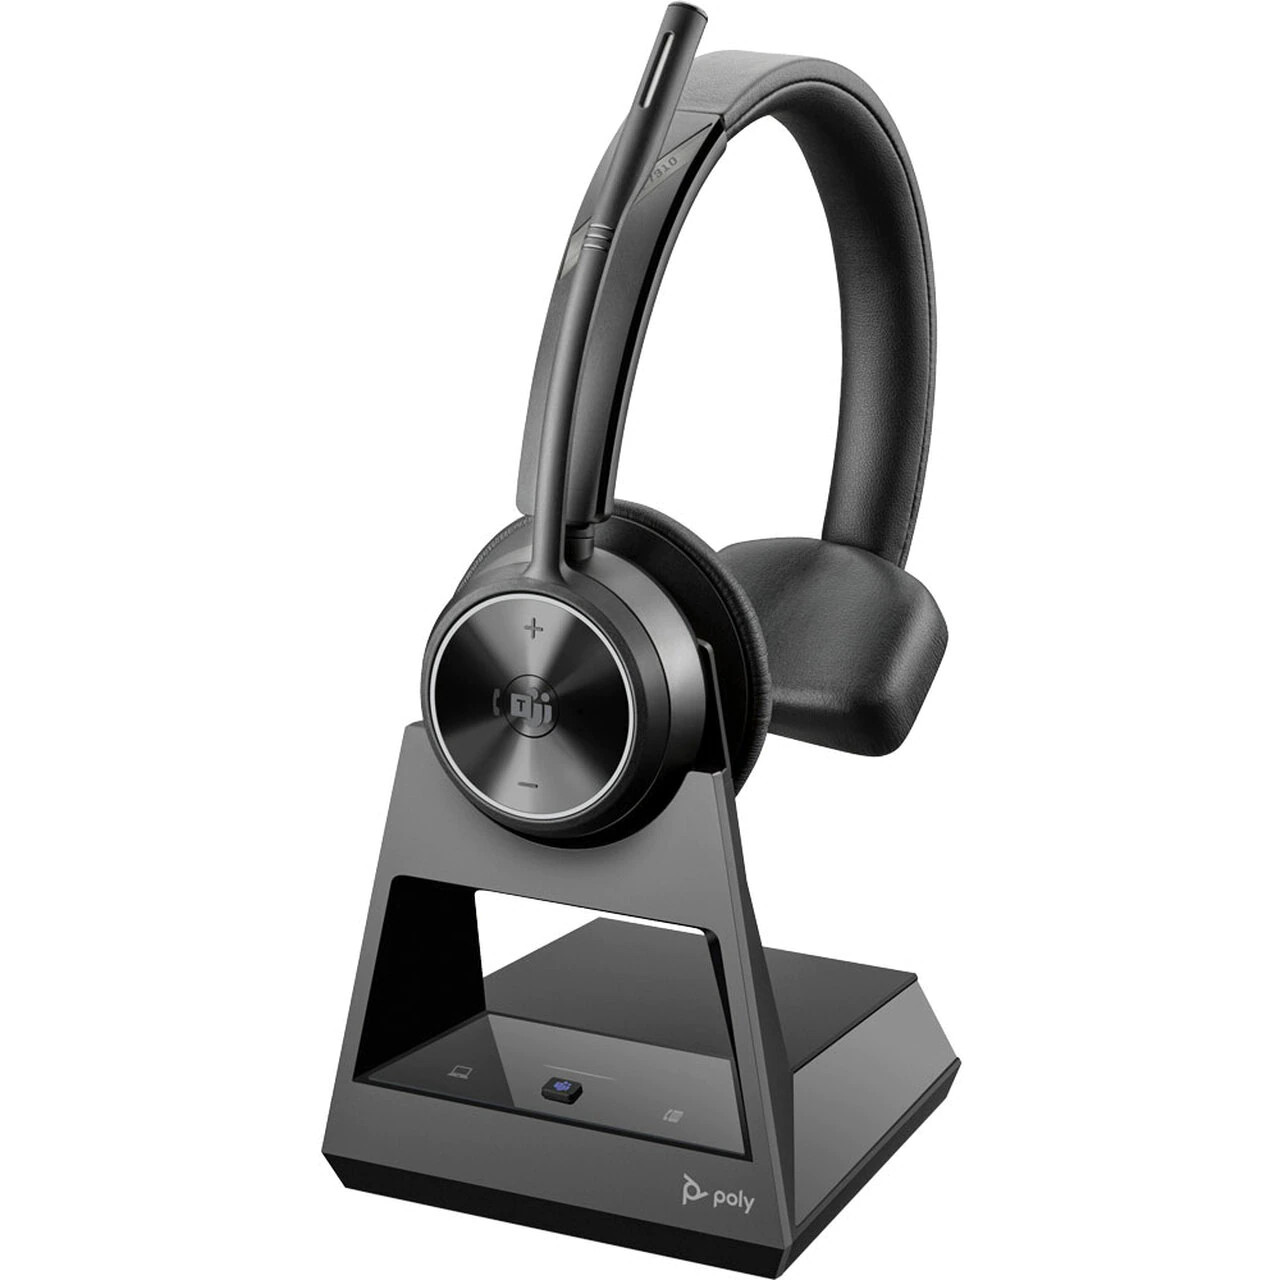 poly savi 7310 office wireless headset mono, deskphone and pc view